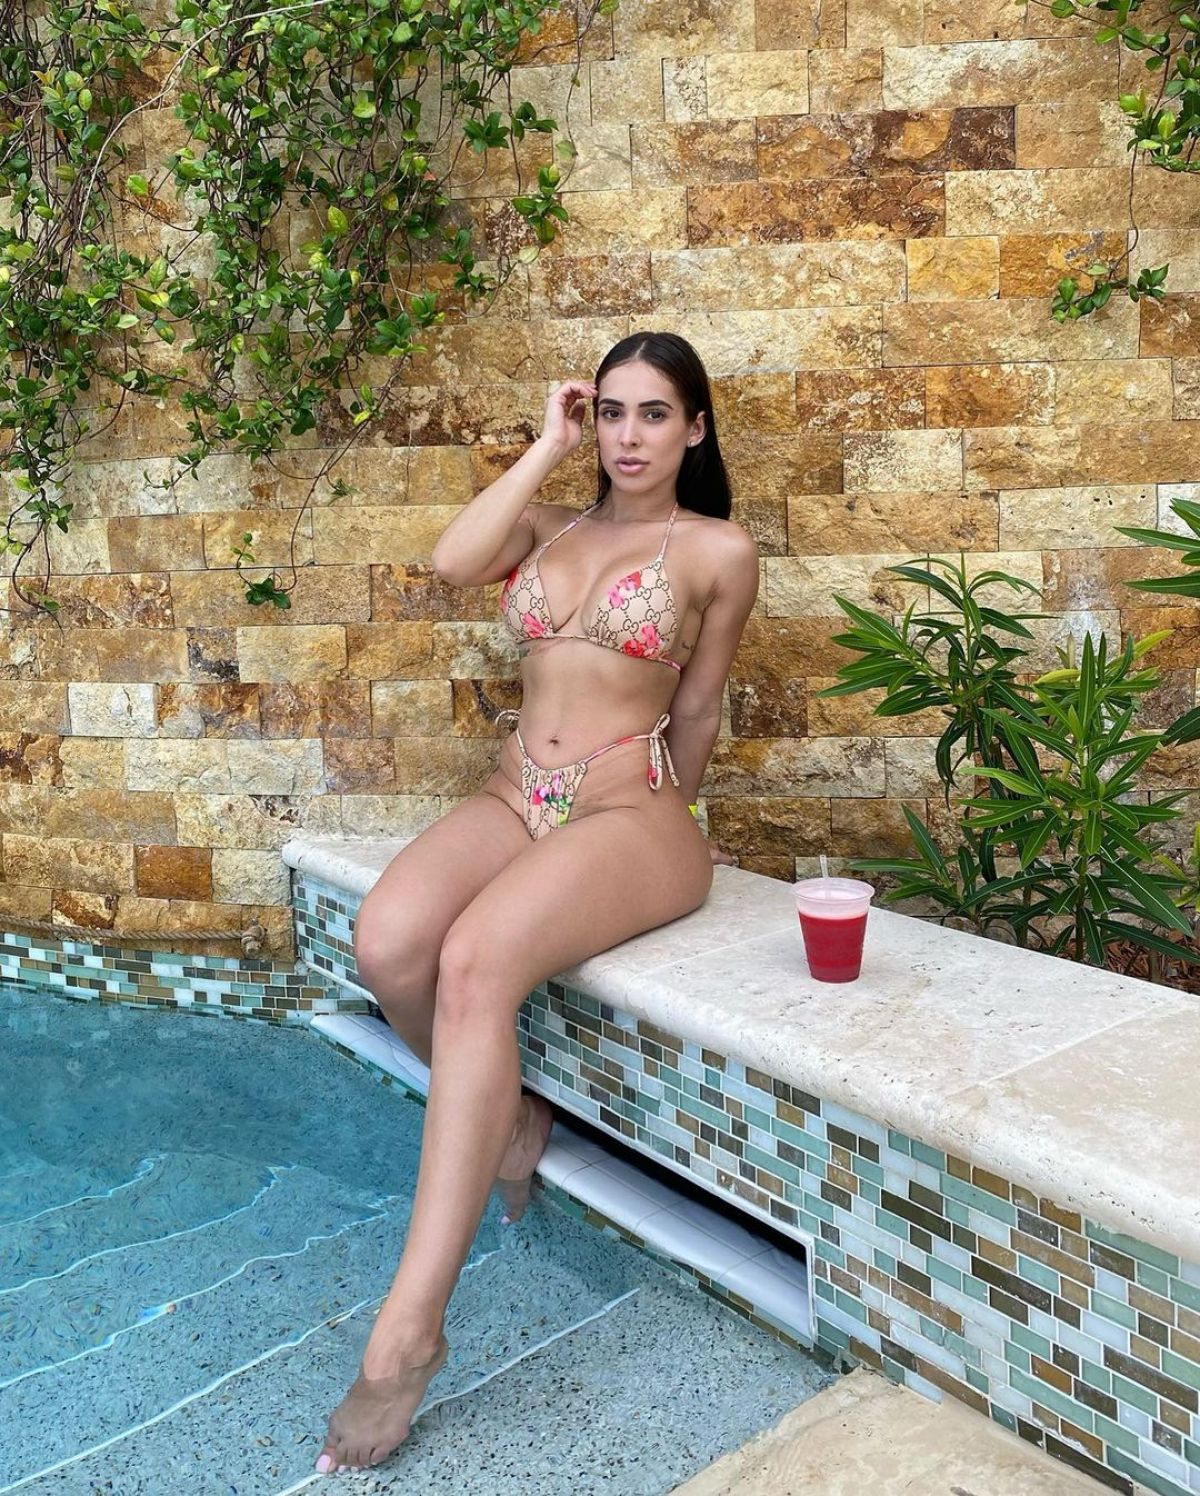 Ansley Pacheco in Bikini Instagram Photos, October 2020 16